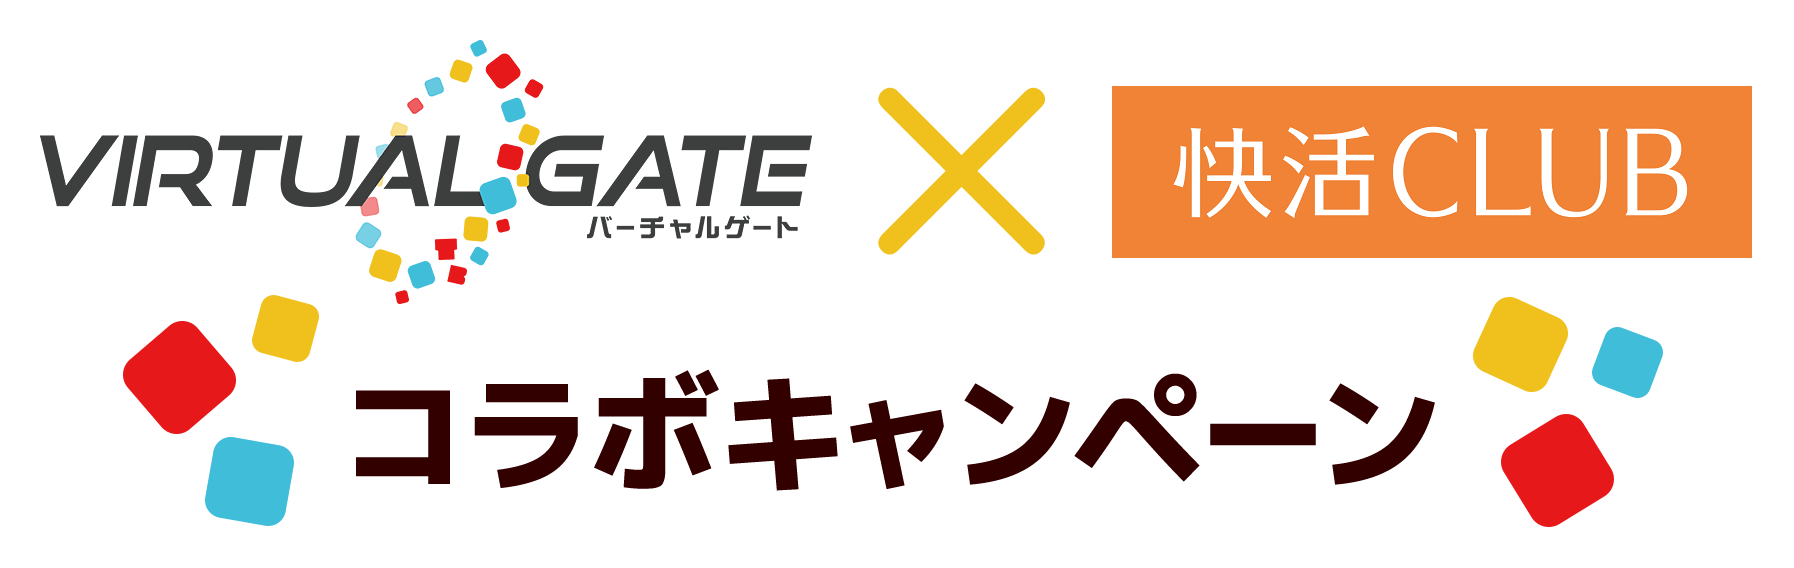 VIRTUAL GATE × 快活CLUB コラボキャンペーン